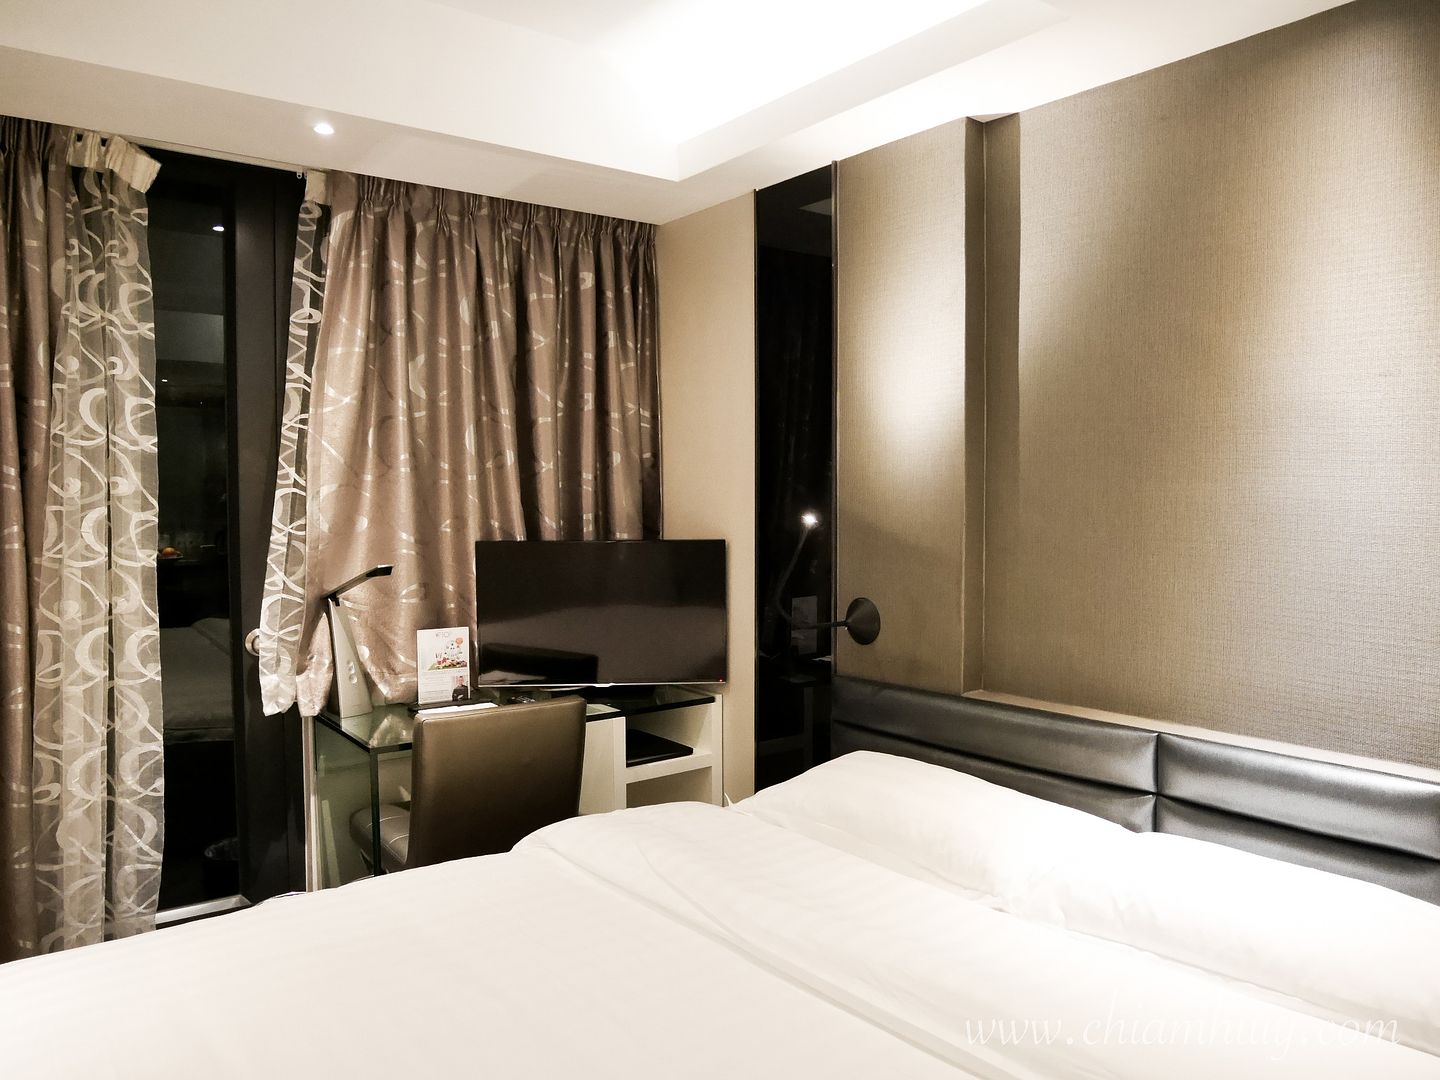  photo Hongkong Hotel Review_31_zpsziolkvui.jpg